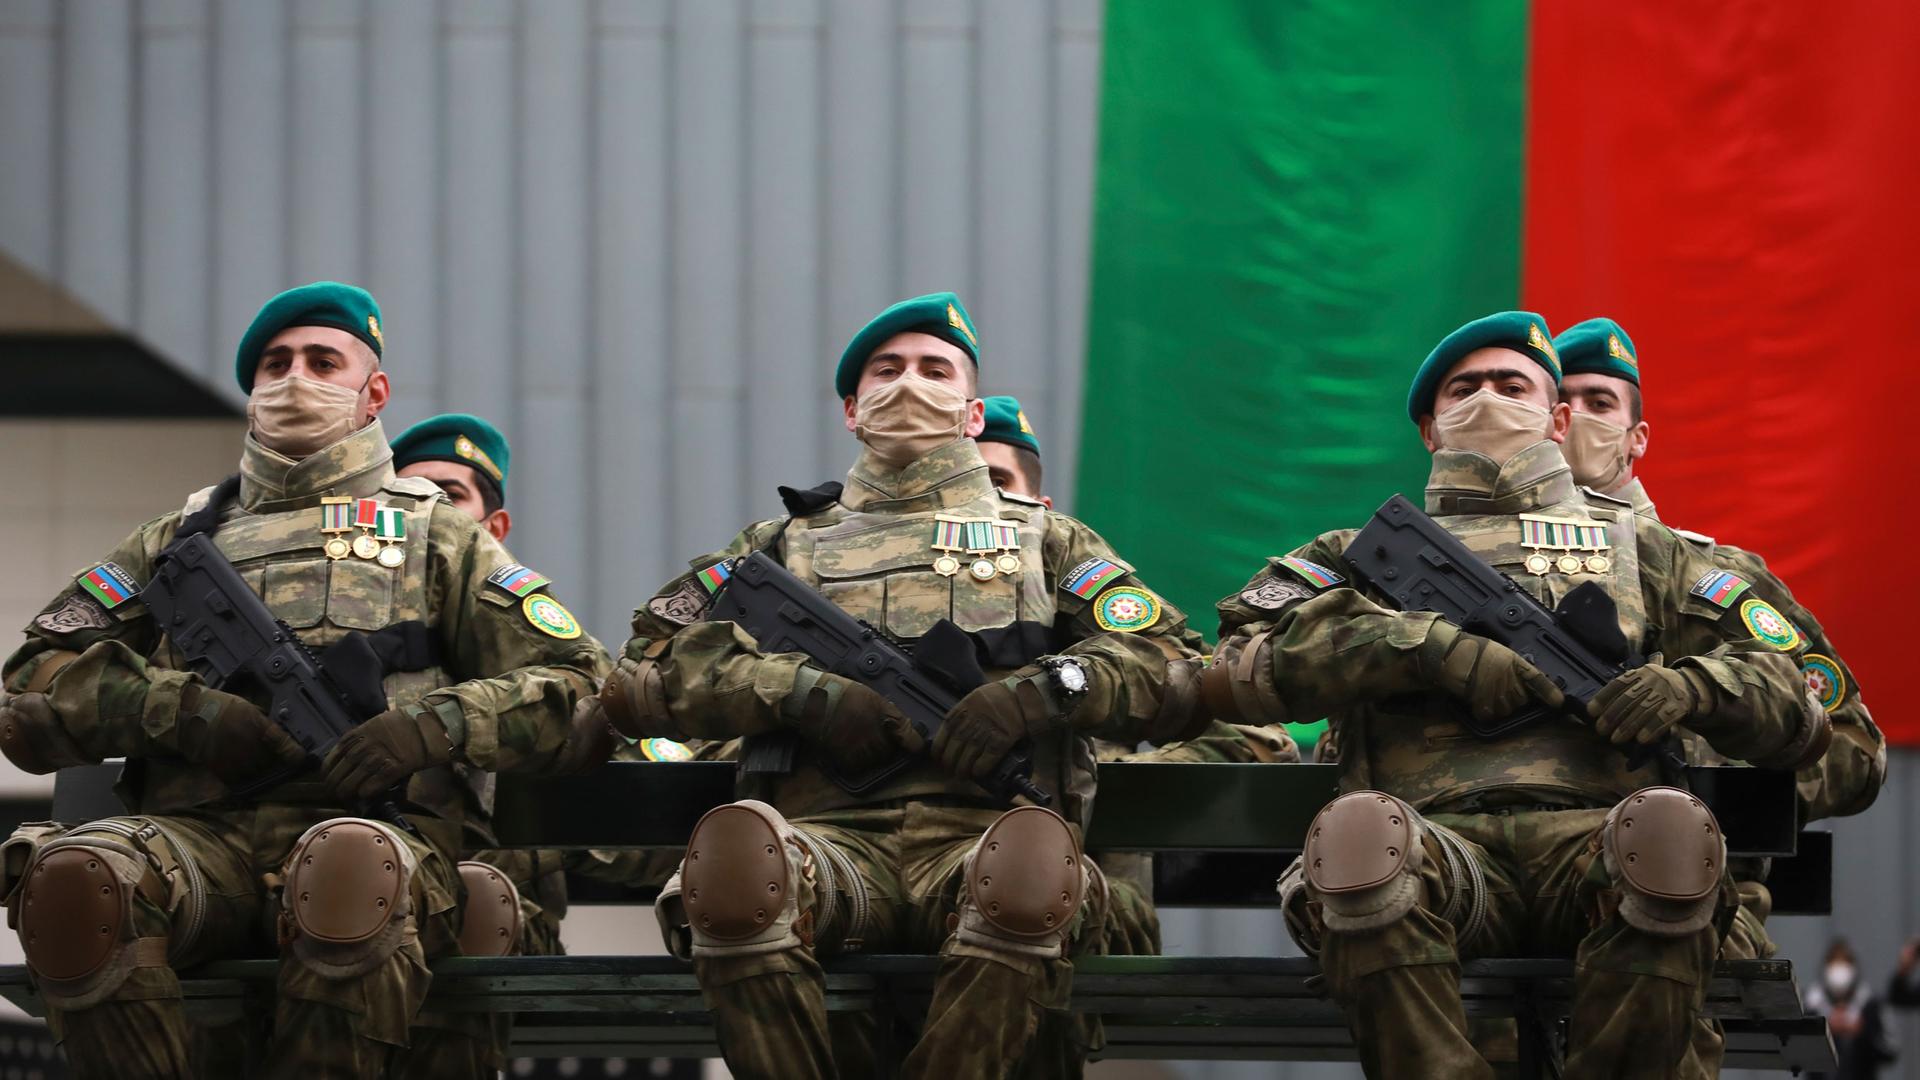 Azerbaijani troops attend the parade in Baku, Azerbaijan, Thursday, Dec. 10, 2020.